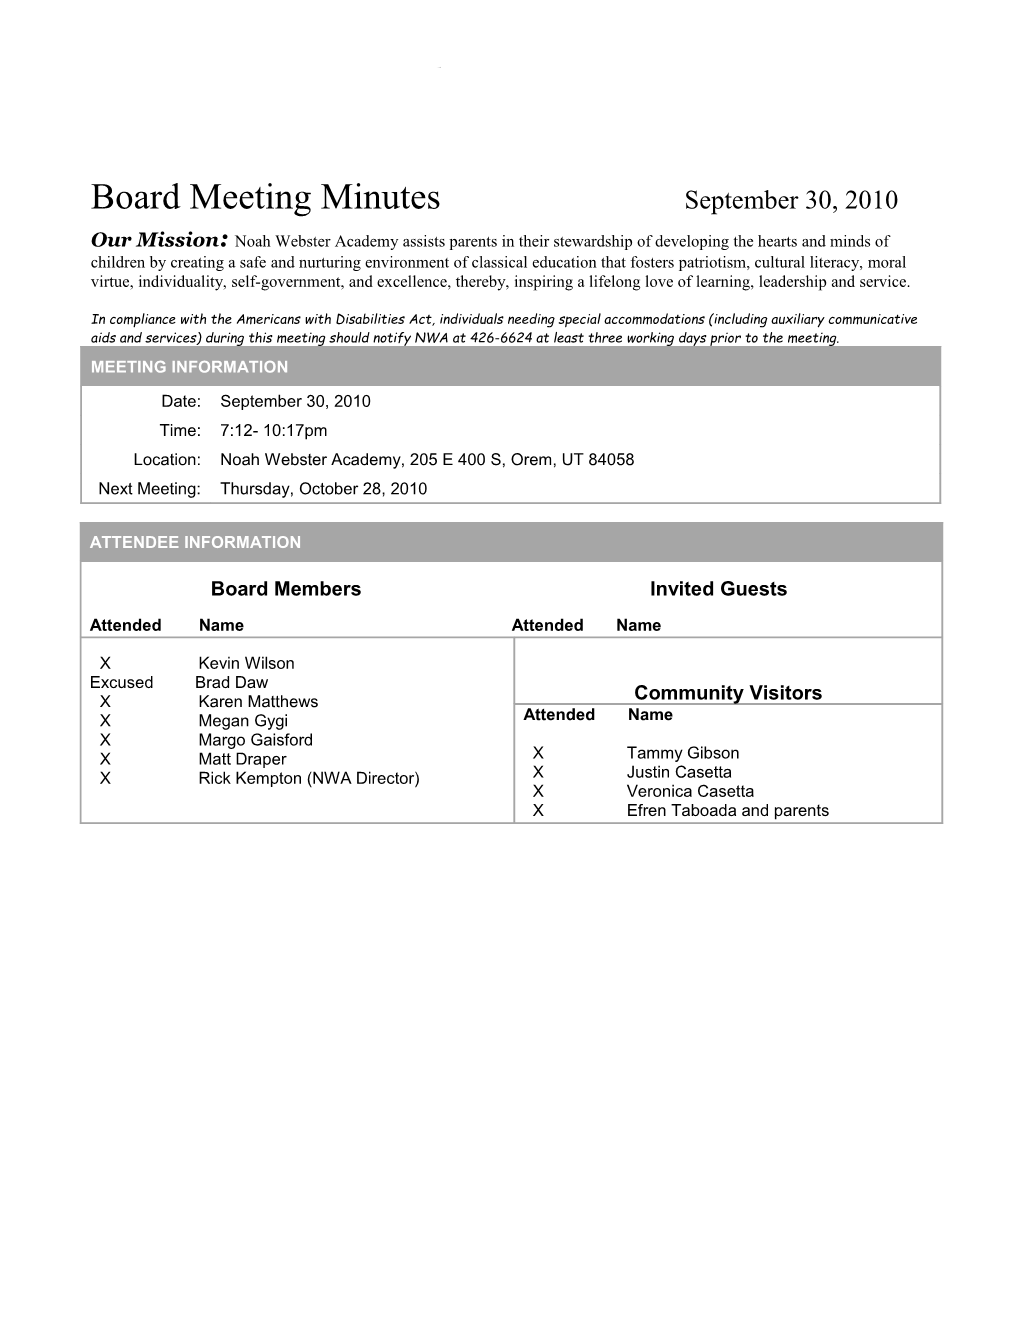 Board Meeting Agenda August 26, 2009